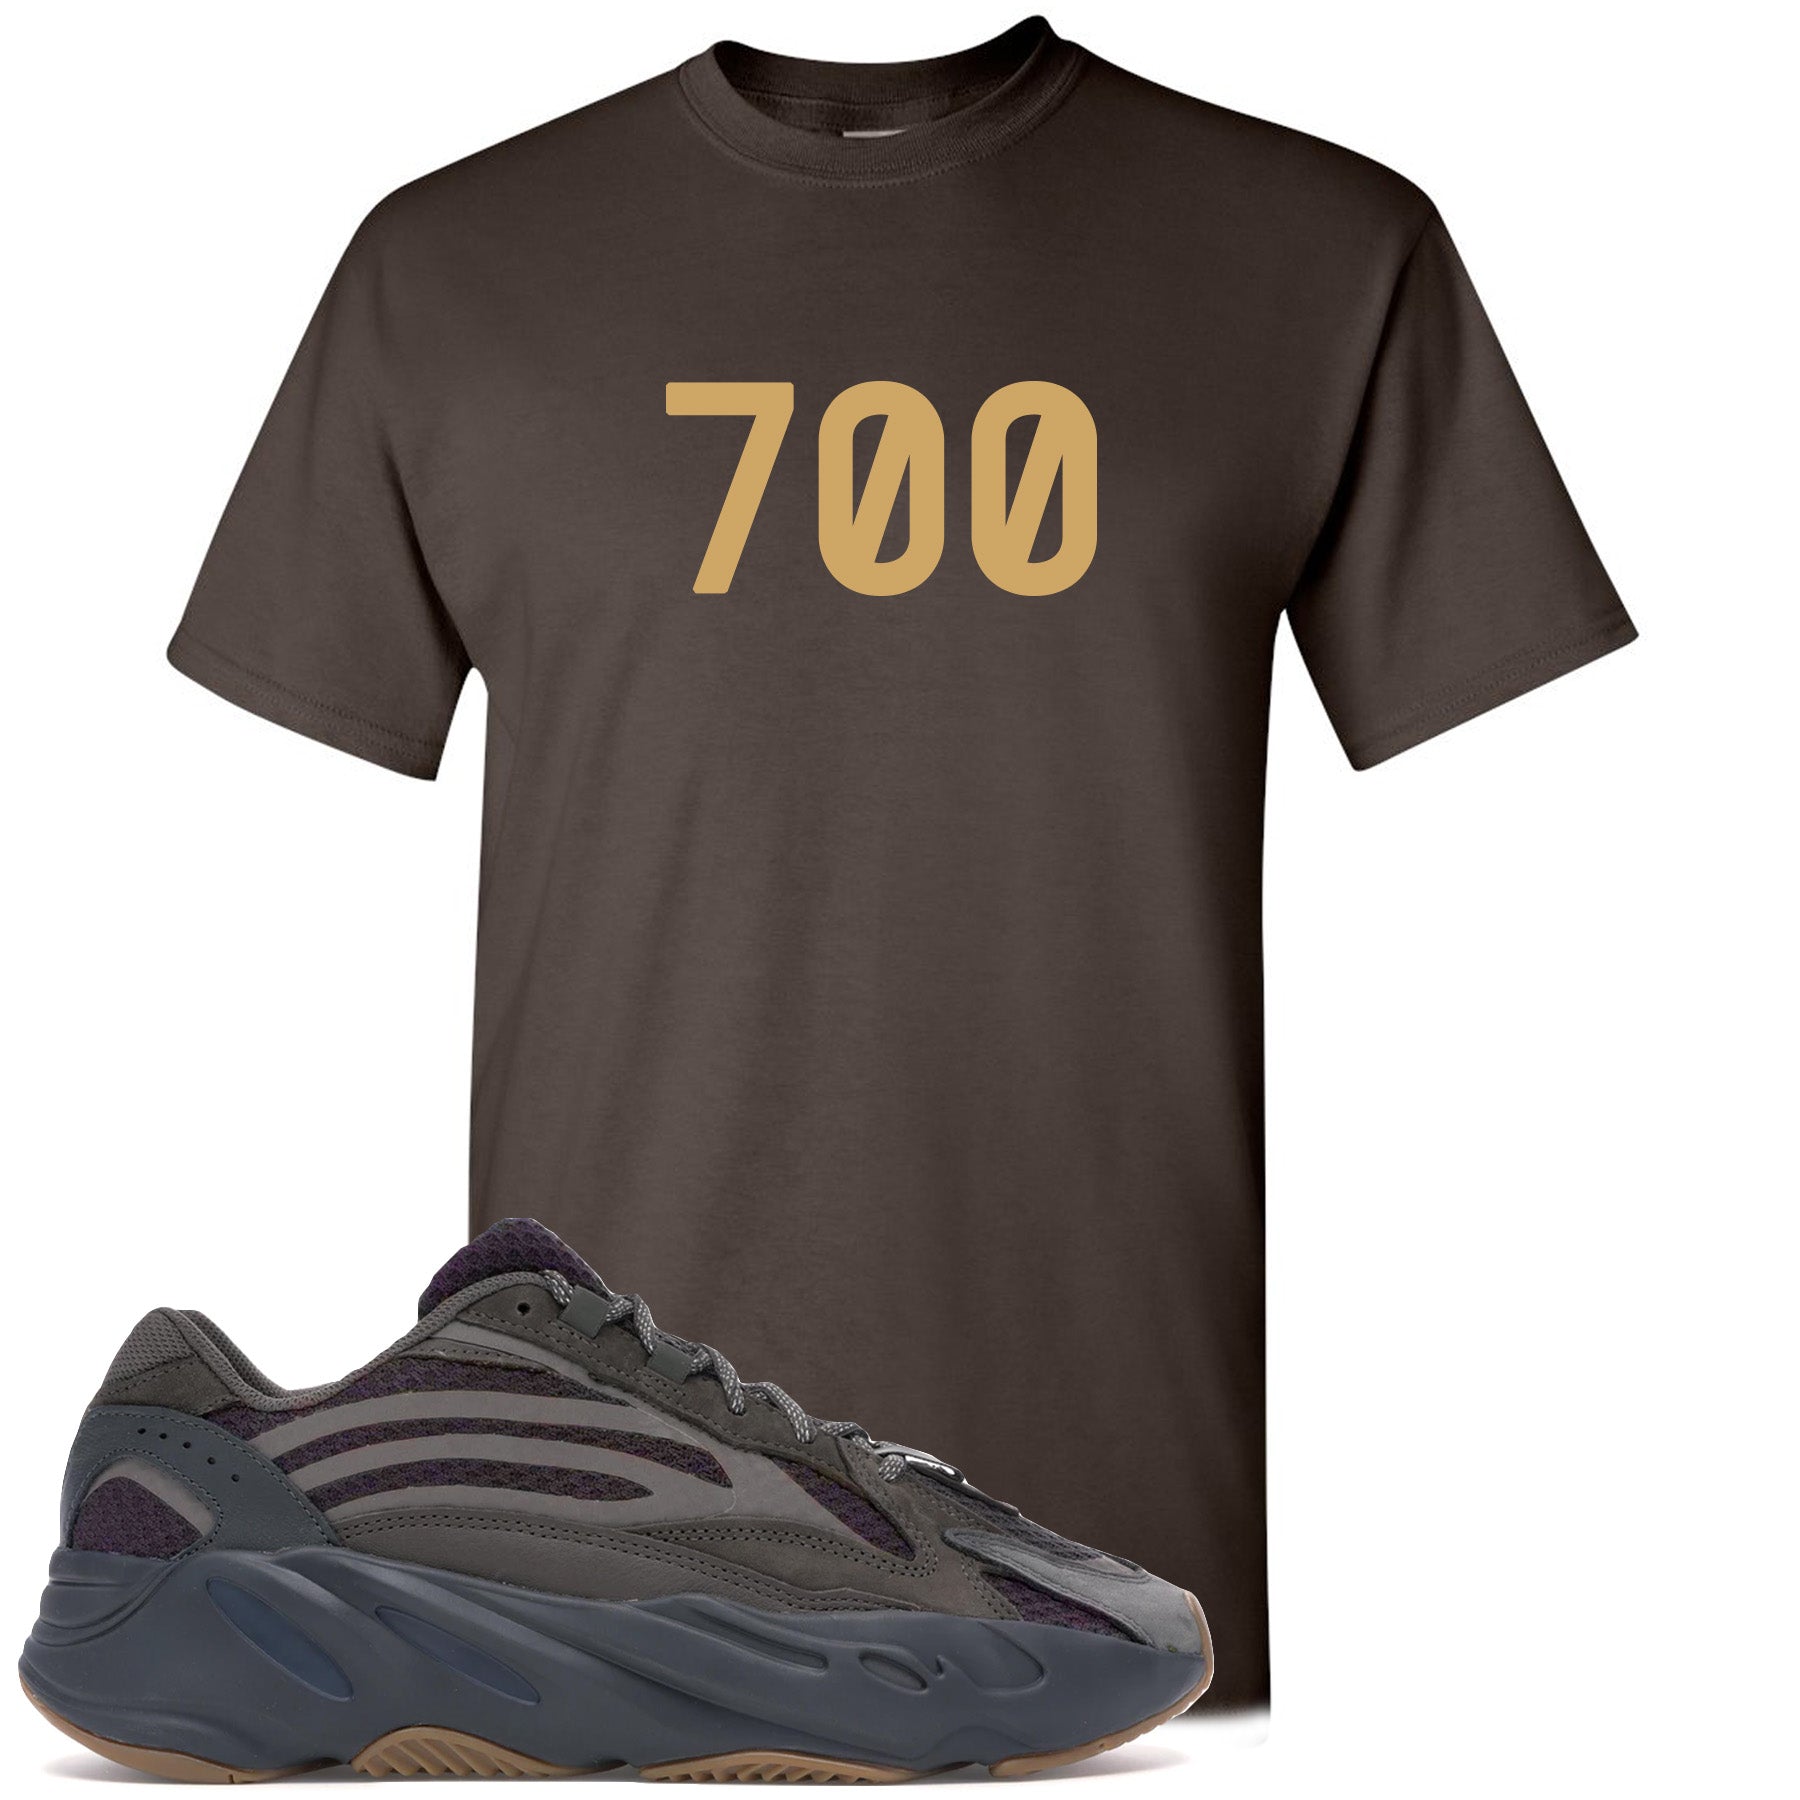 yeezy 700 t shirt